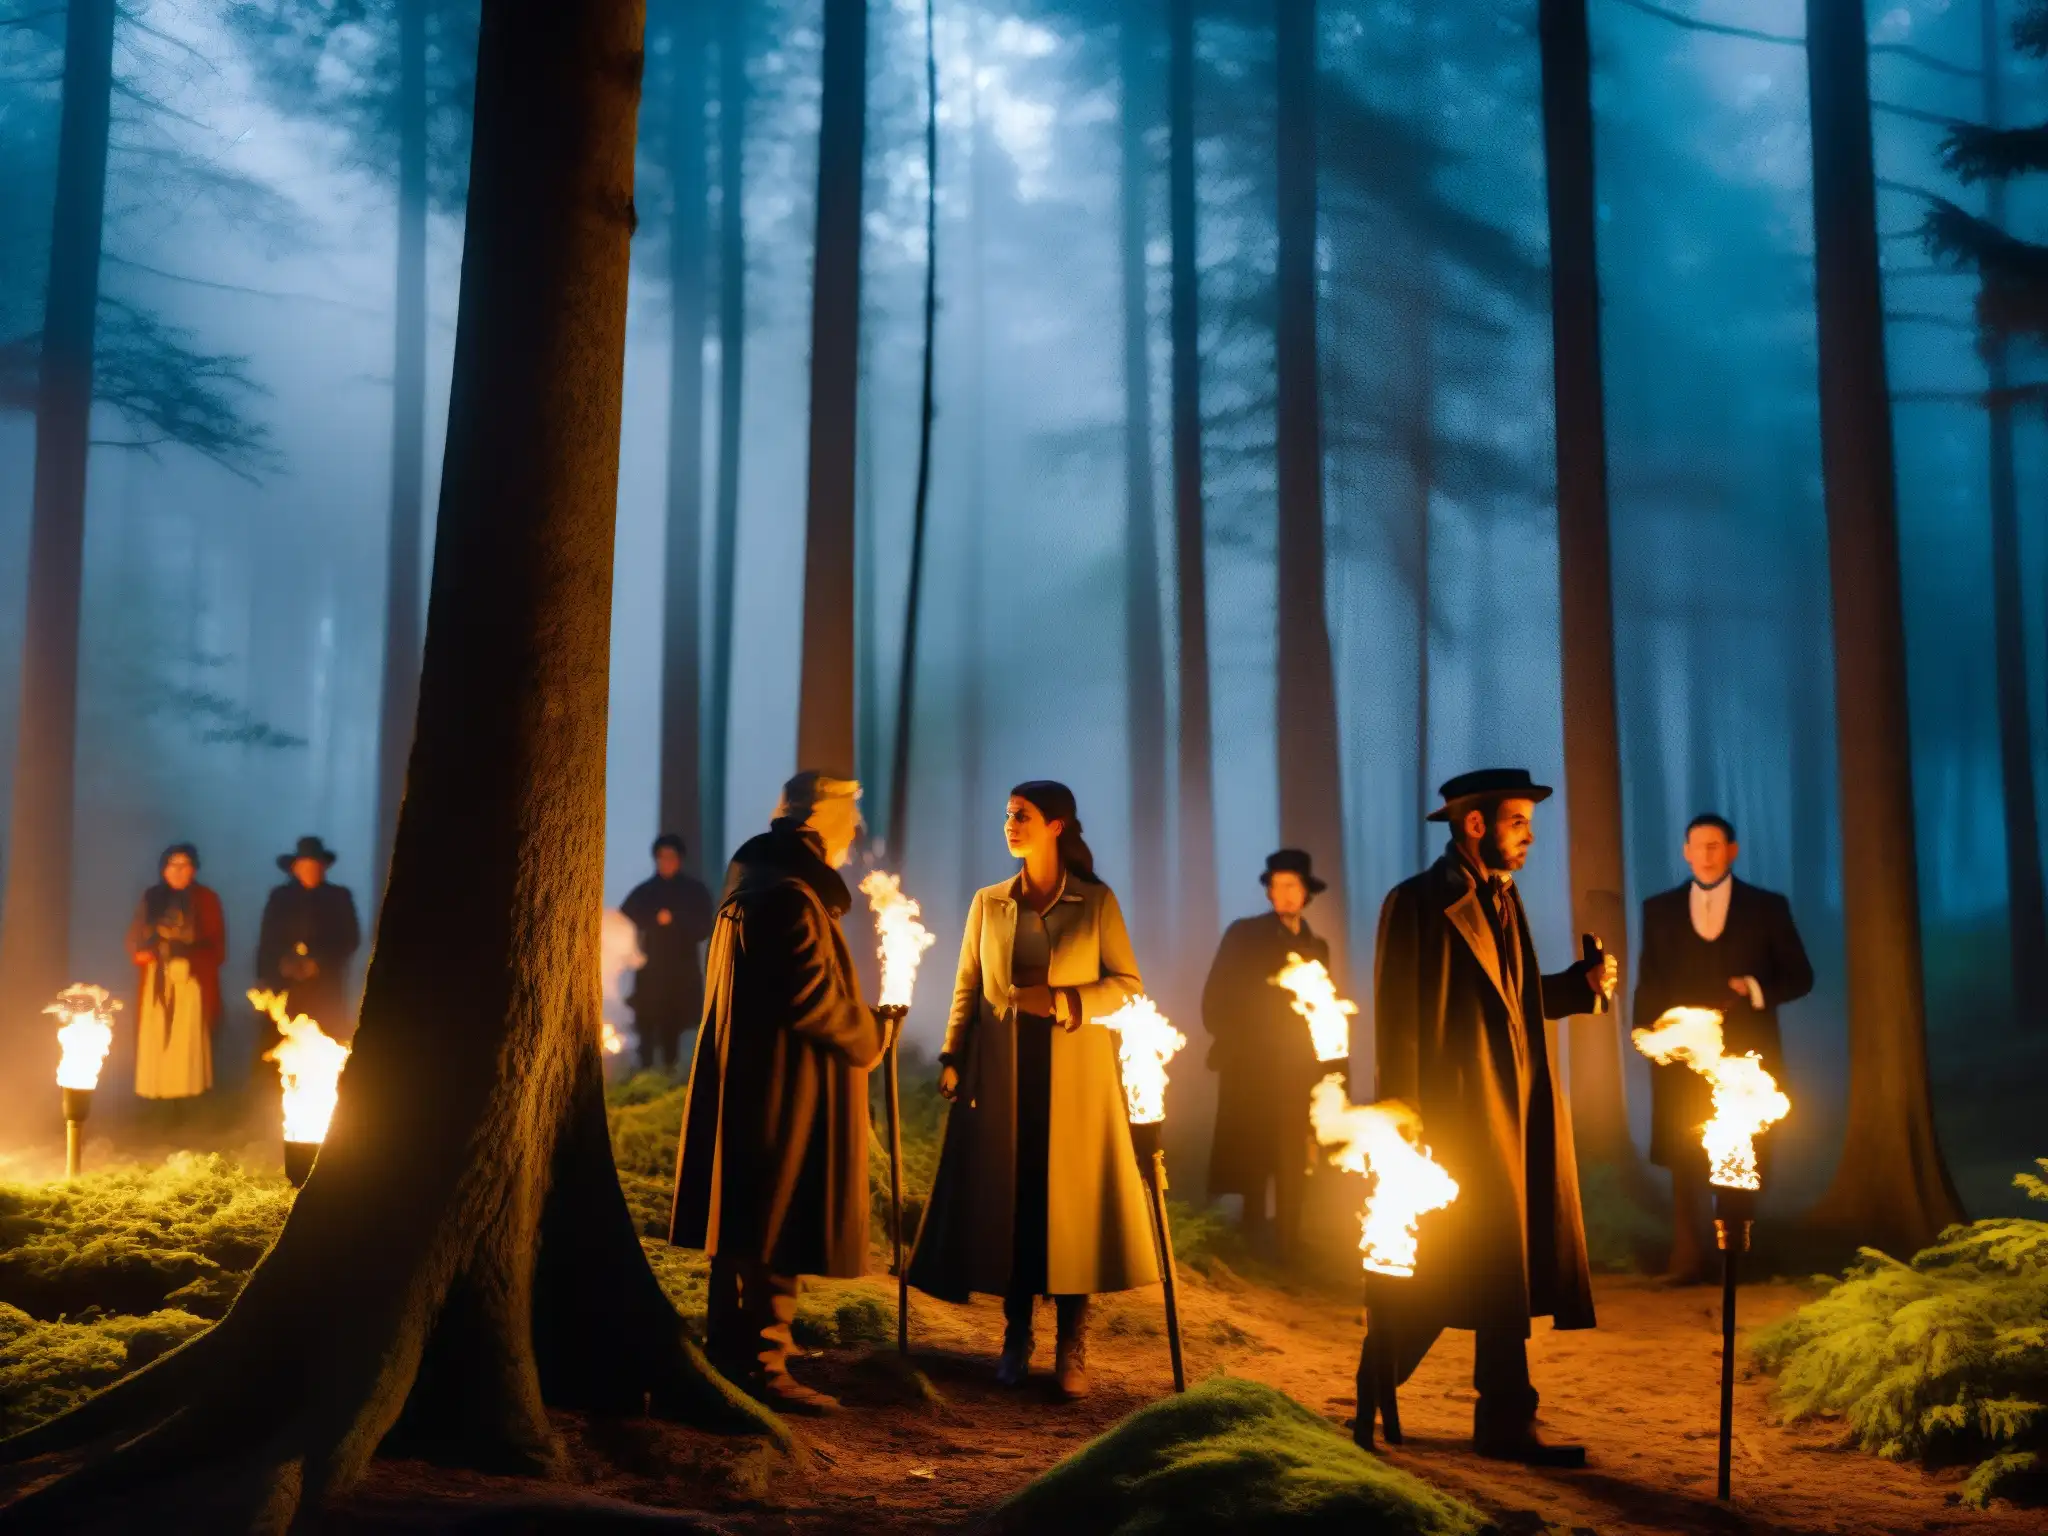 Un grupo busca entre los árboles en un bosque oscuro con antorchas, evocando una caza de brujas moderna